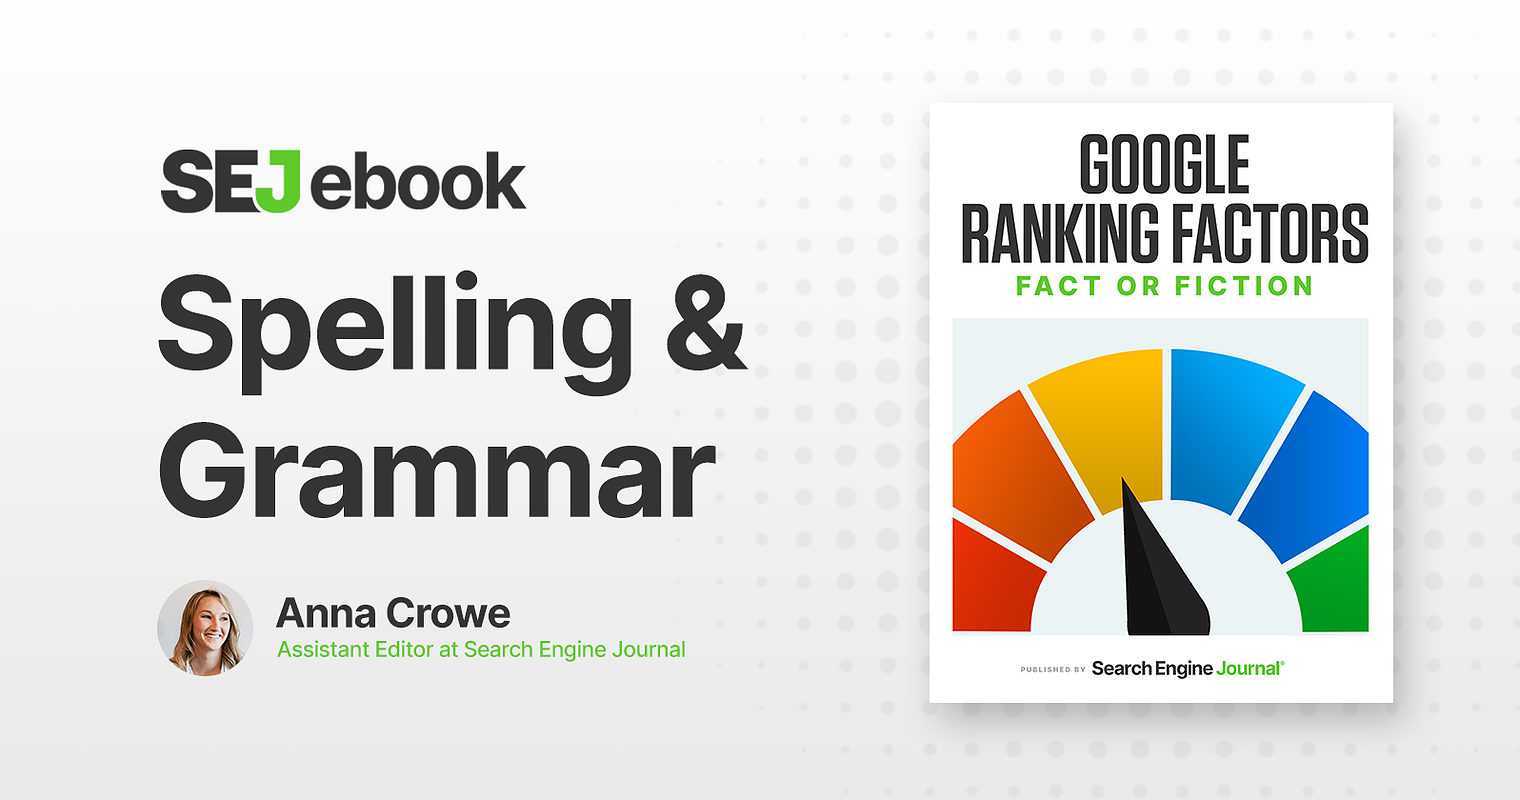 Spelling & Grammar: Is It A Google Ranking Factor?